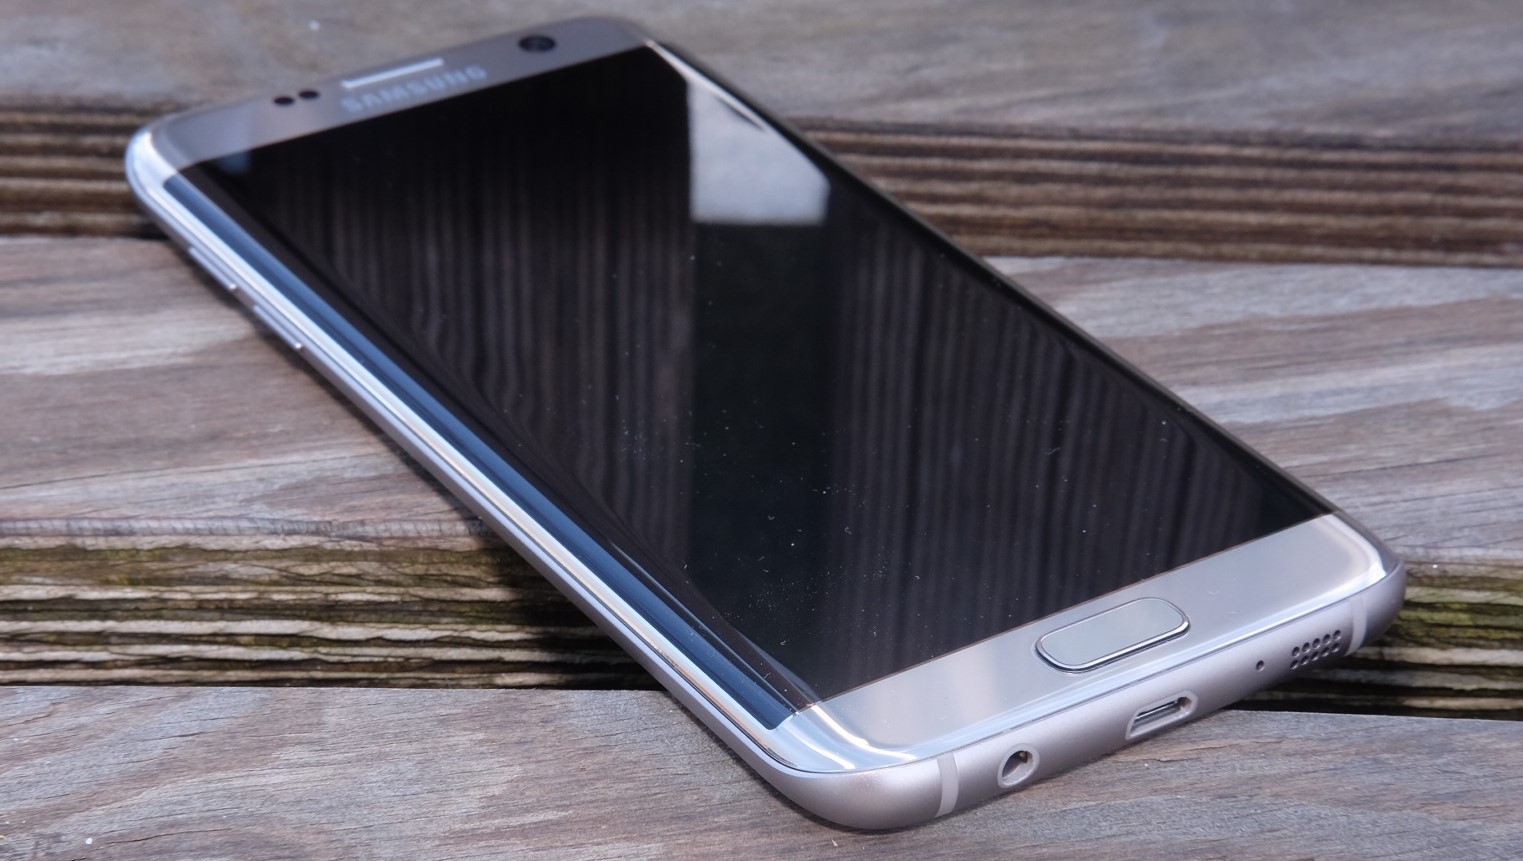 Nå kan du oppgradere Galaxy S7-en din.